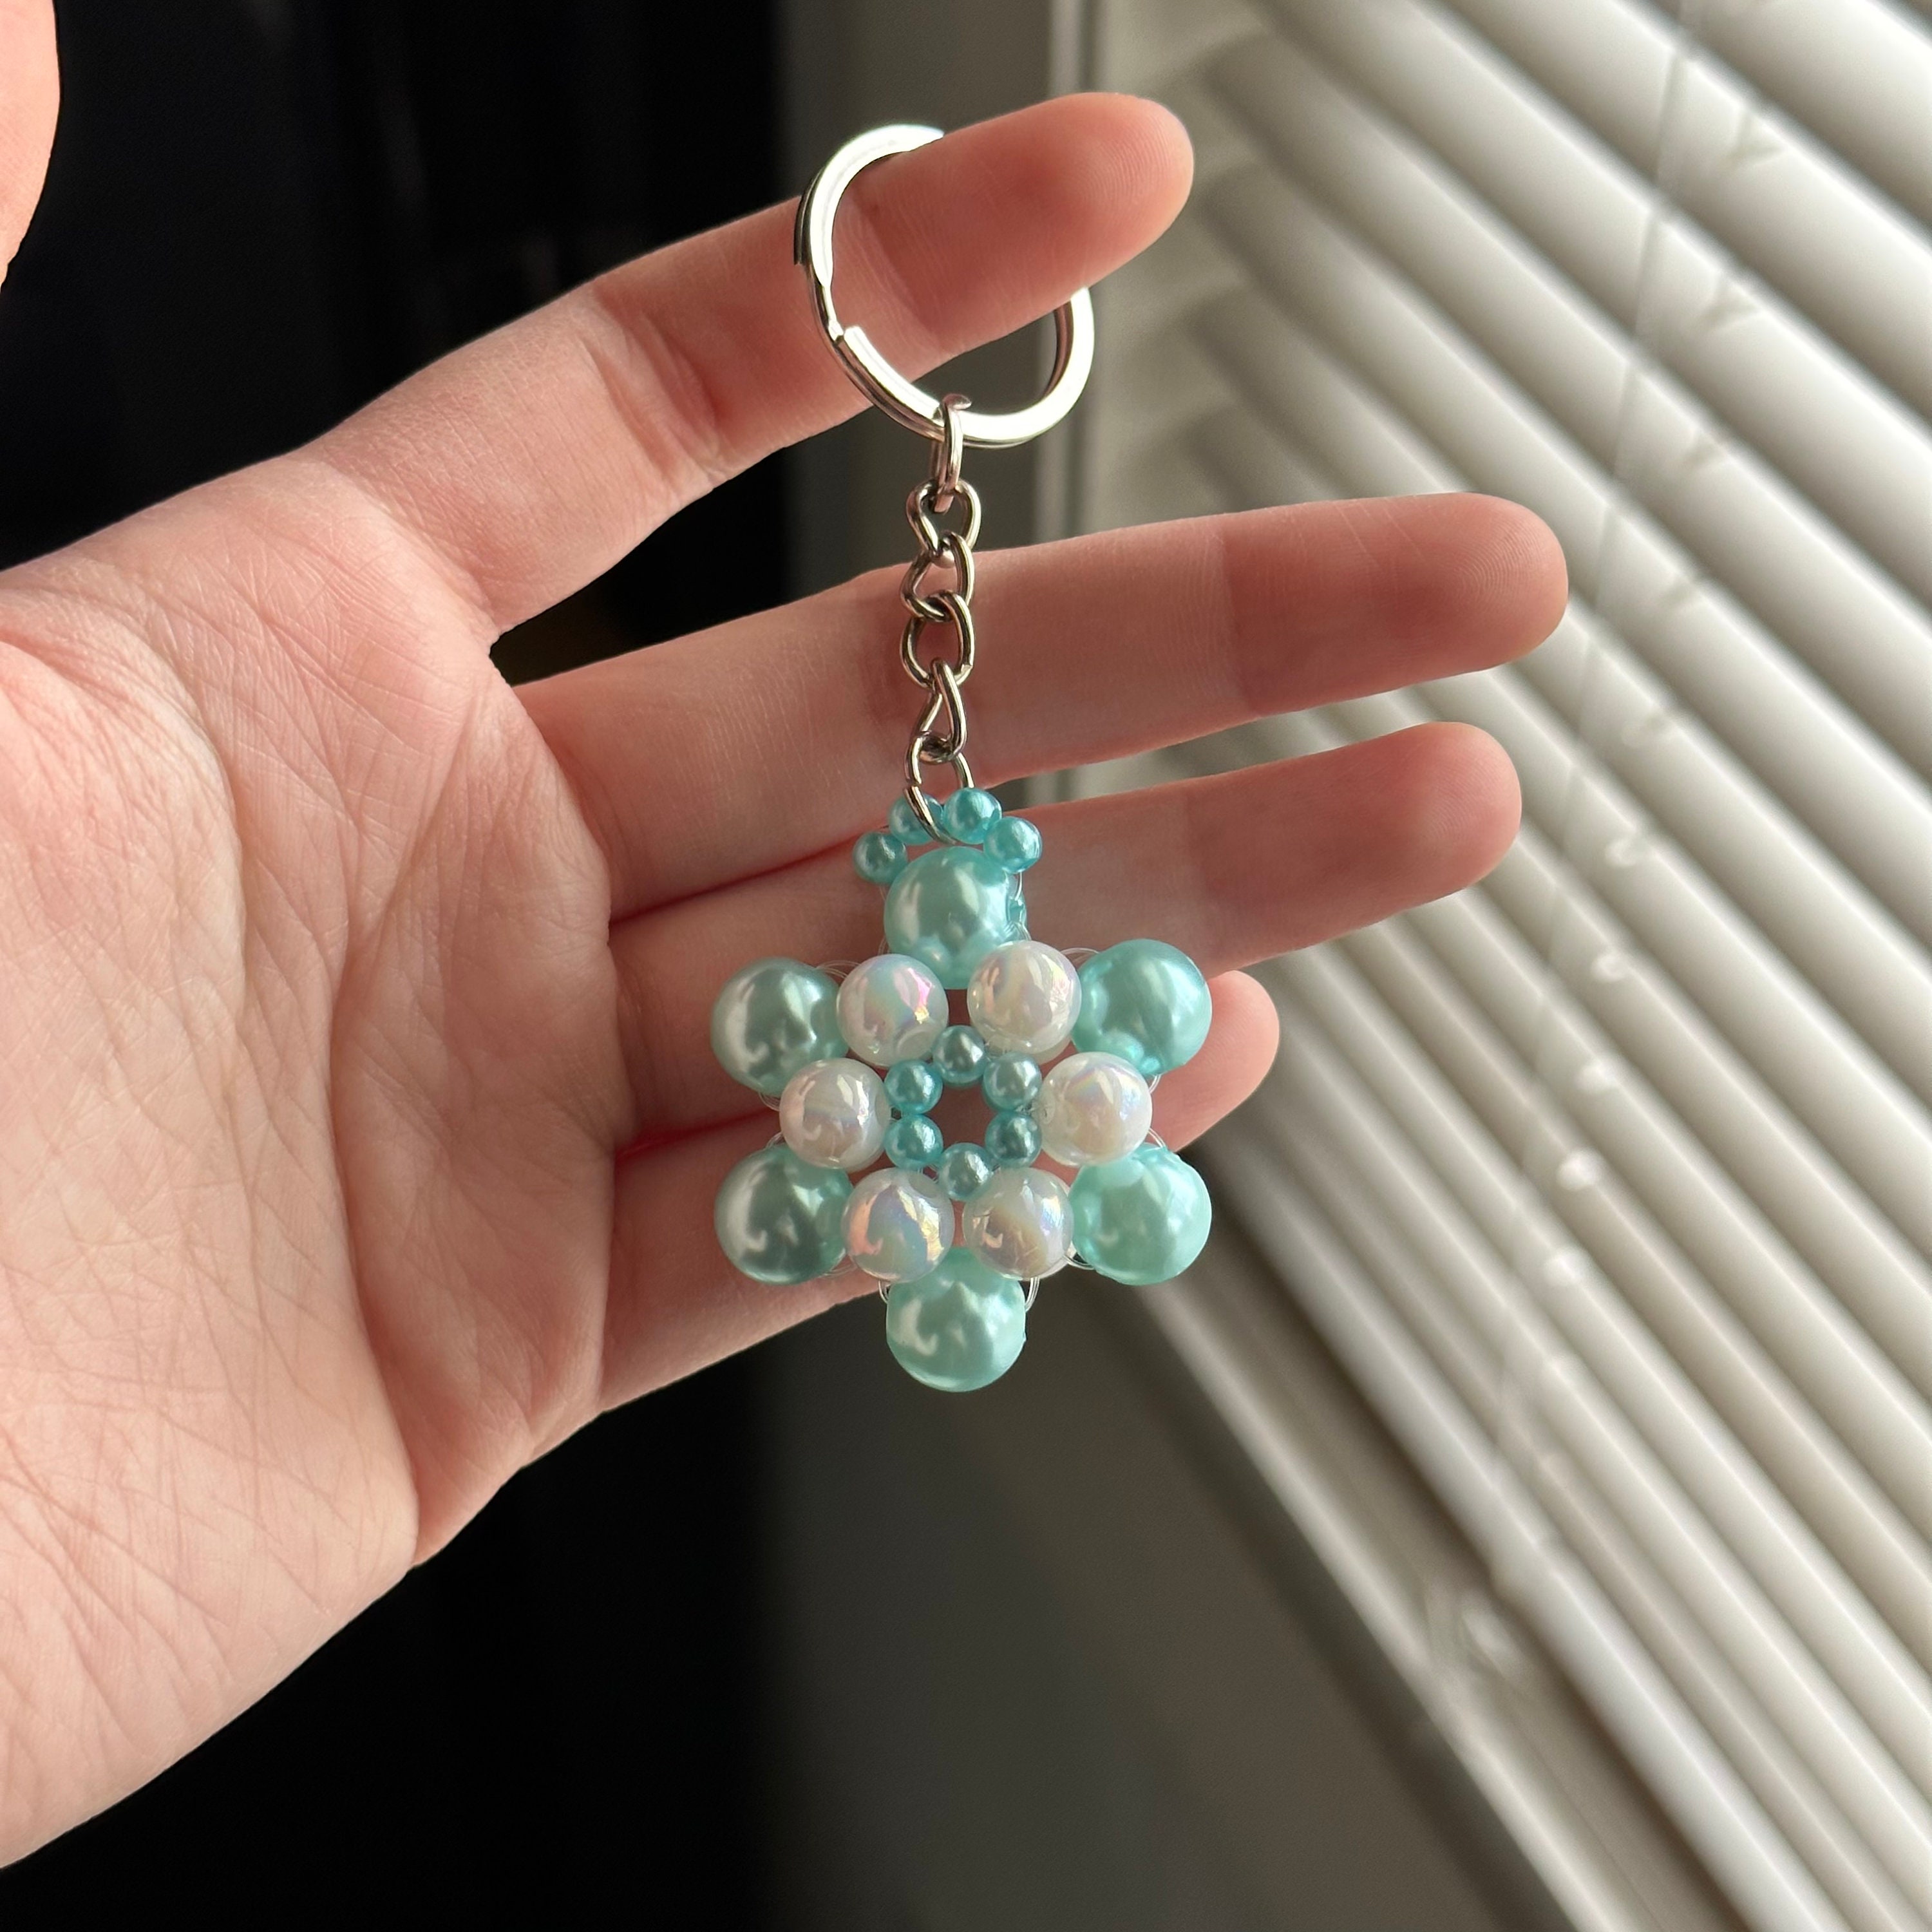 MyfavoriteK Cute Flower Silicone Beaded Keychain for Women Girls Key Ring Holder for Car Keys Purse Backpack Charm Ornament